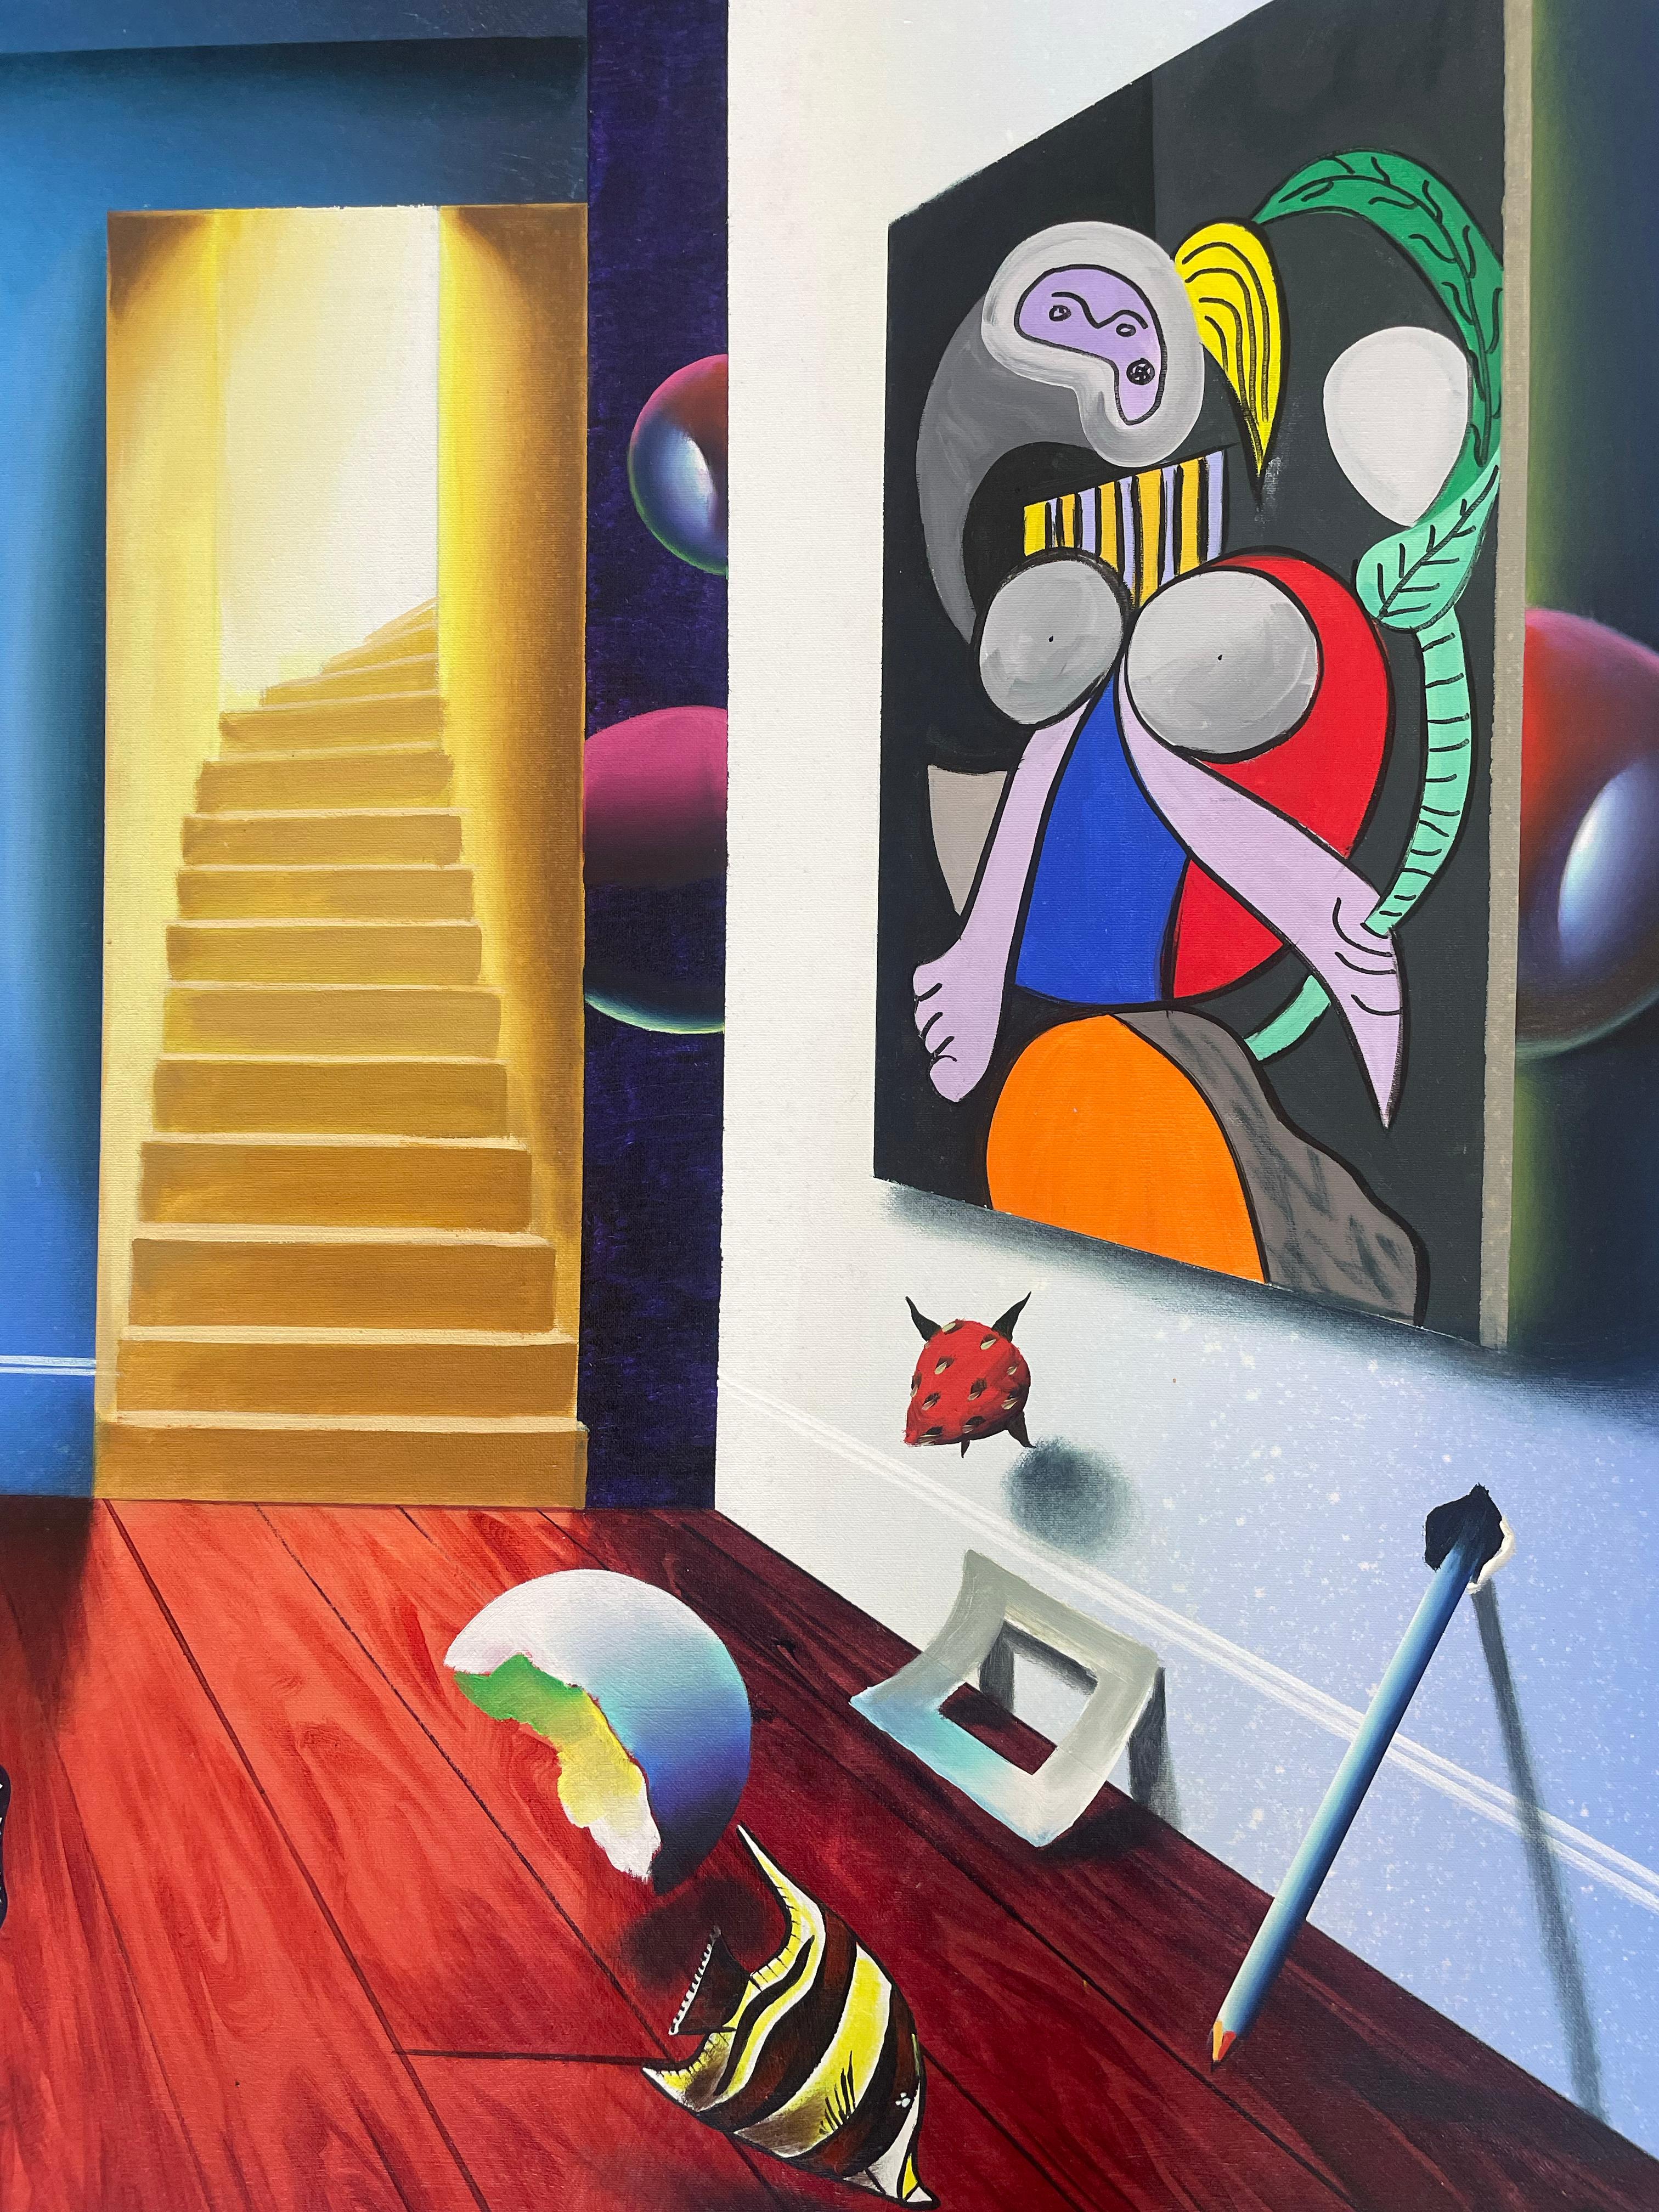 Homage to Picasso Surrealism - Painting by Ferjo, Fernando de Jesus Oliveira